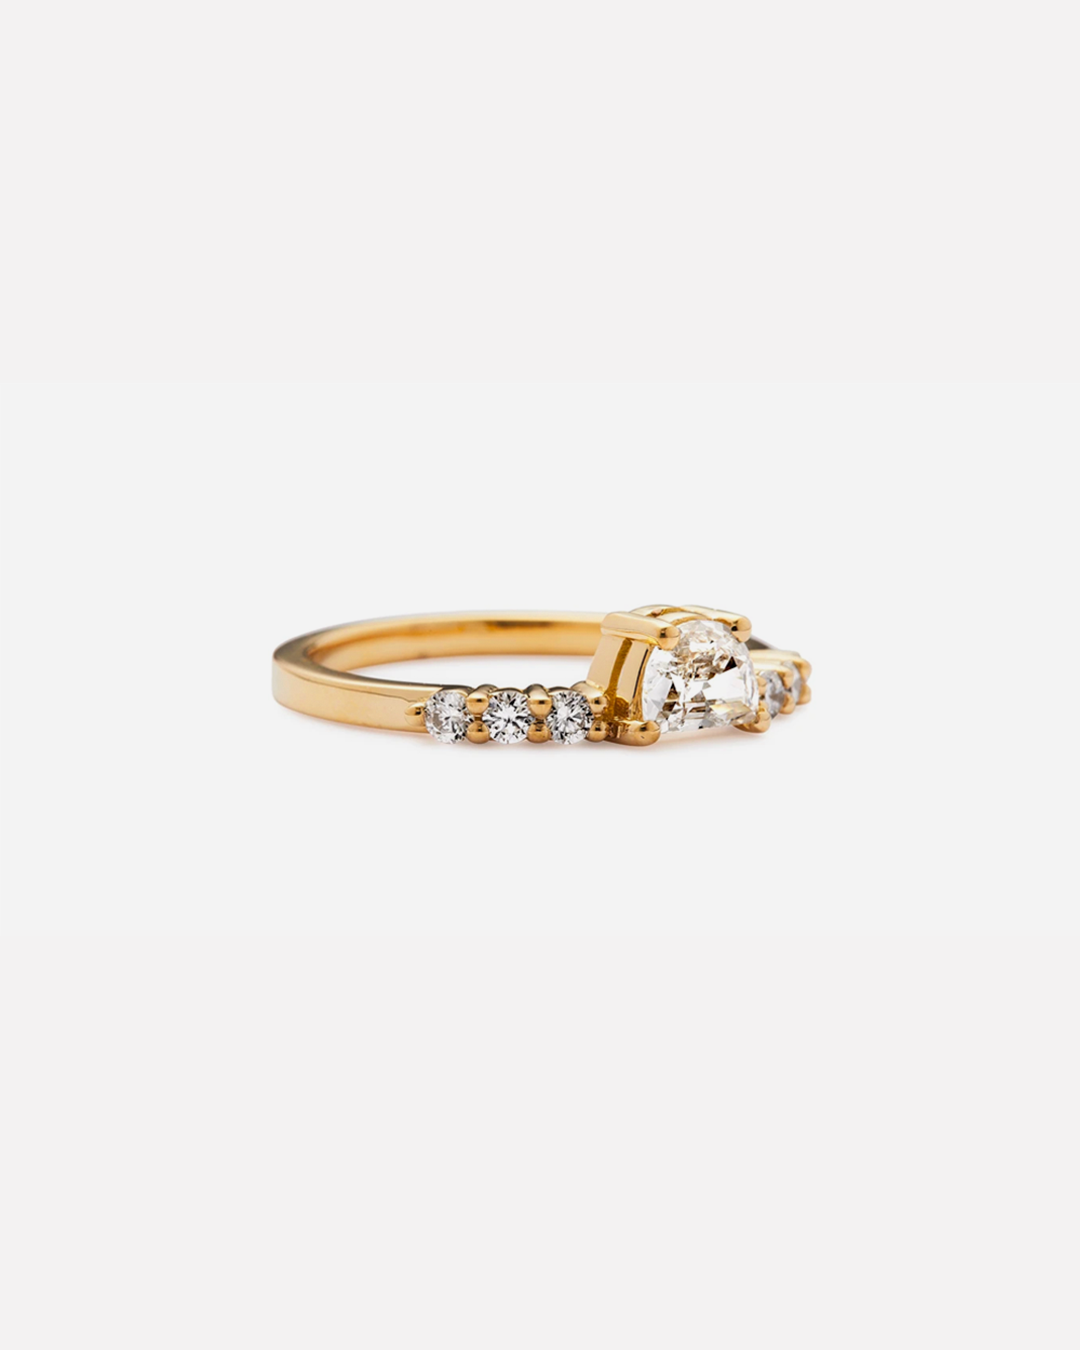 Apollo Ring / Half Moon Diamond Ring By Casual Seance